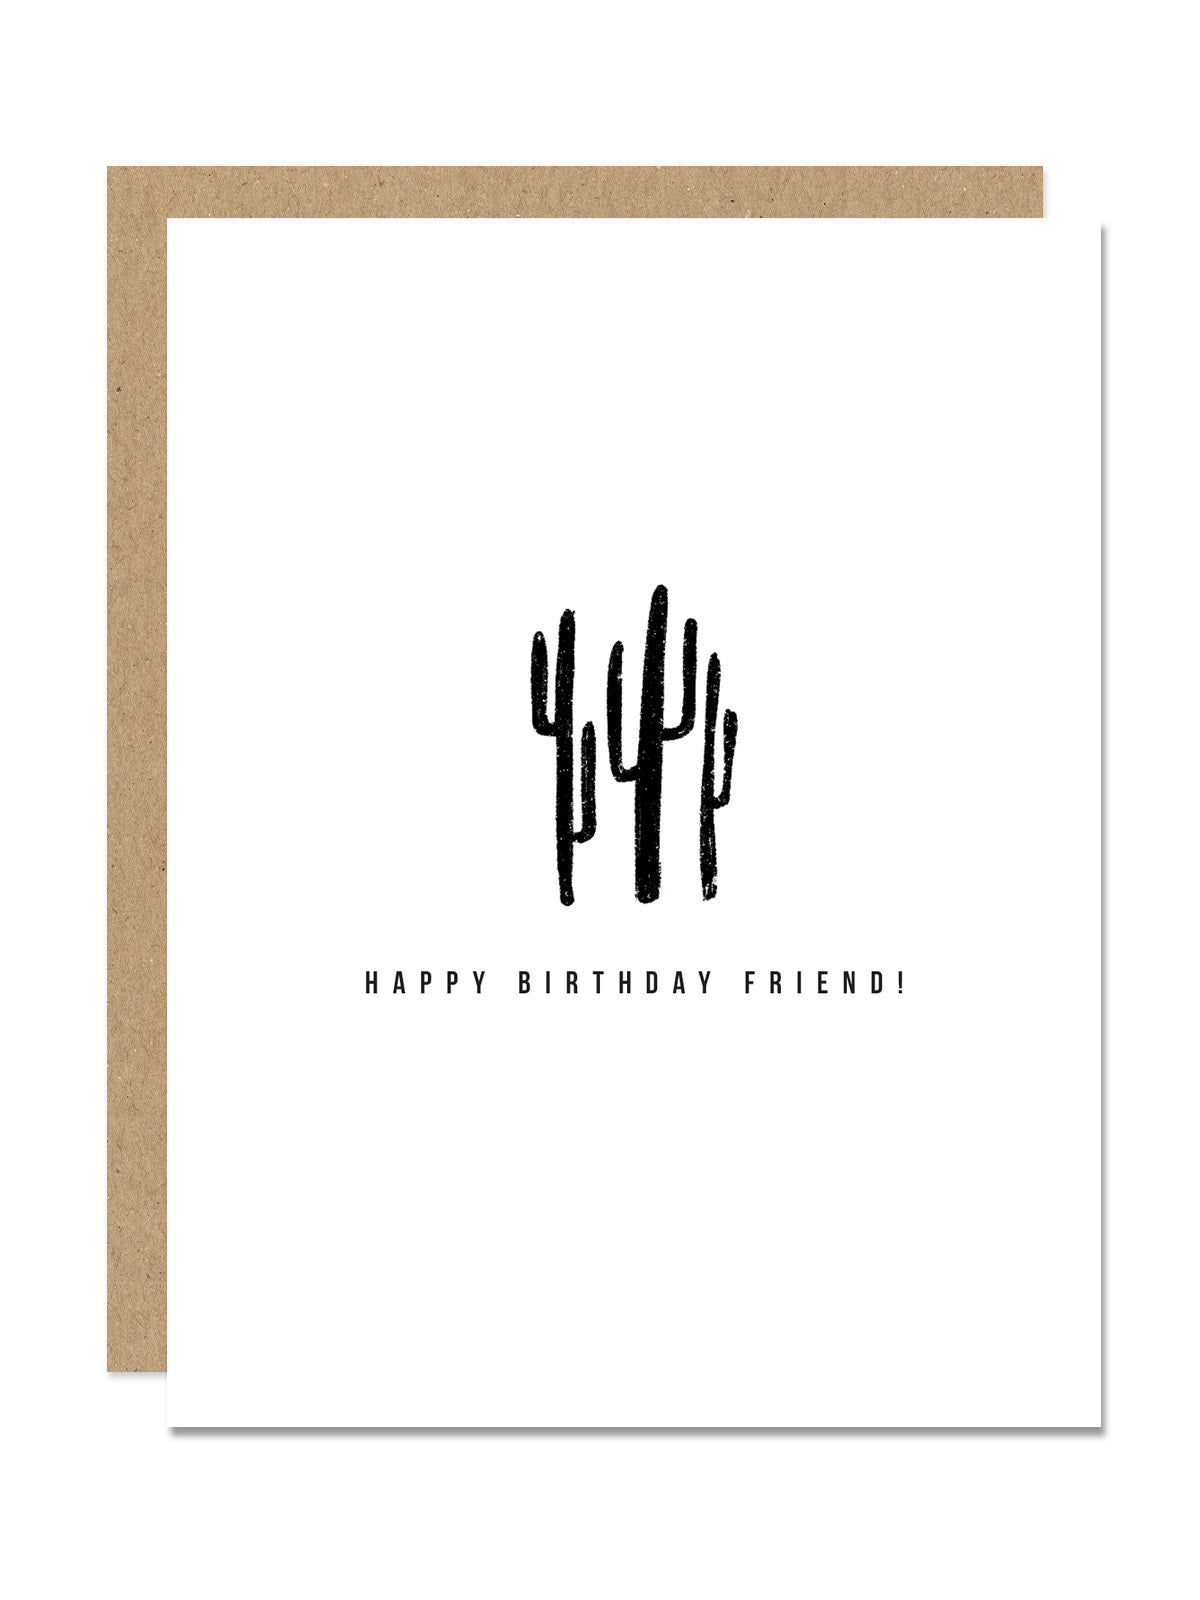 Cactus Happy Birthday Friend Card - Black